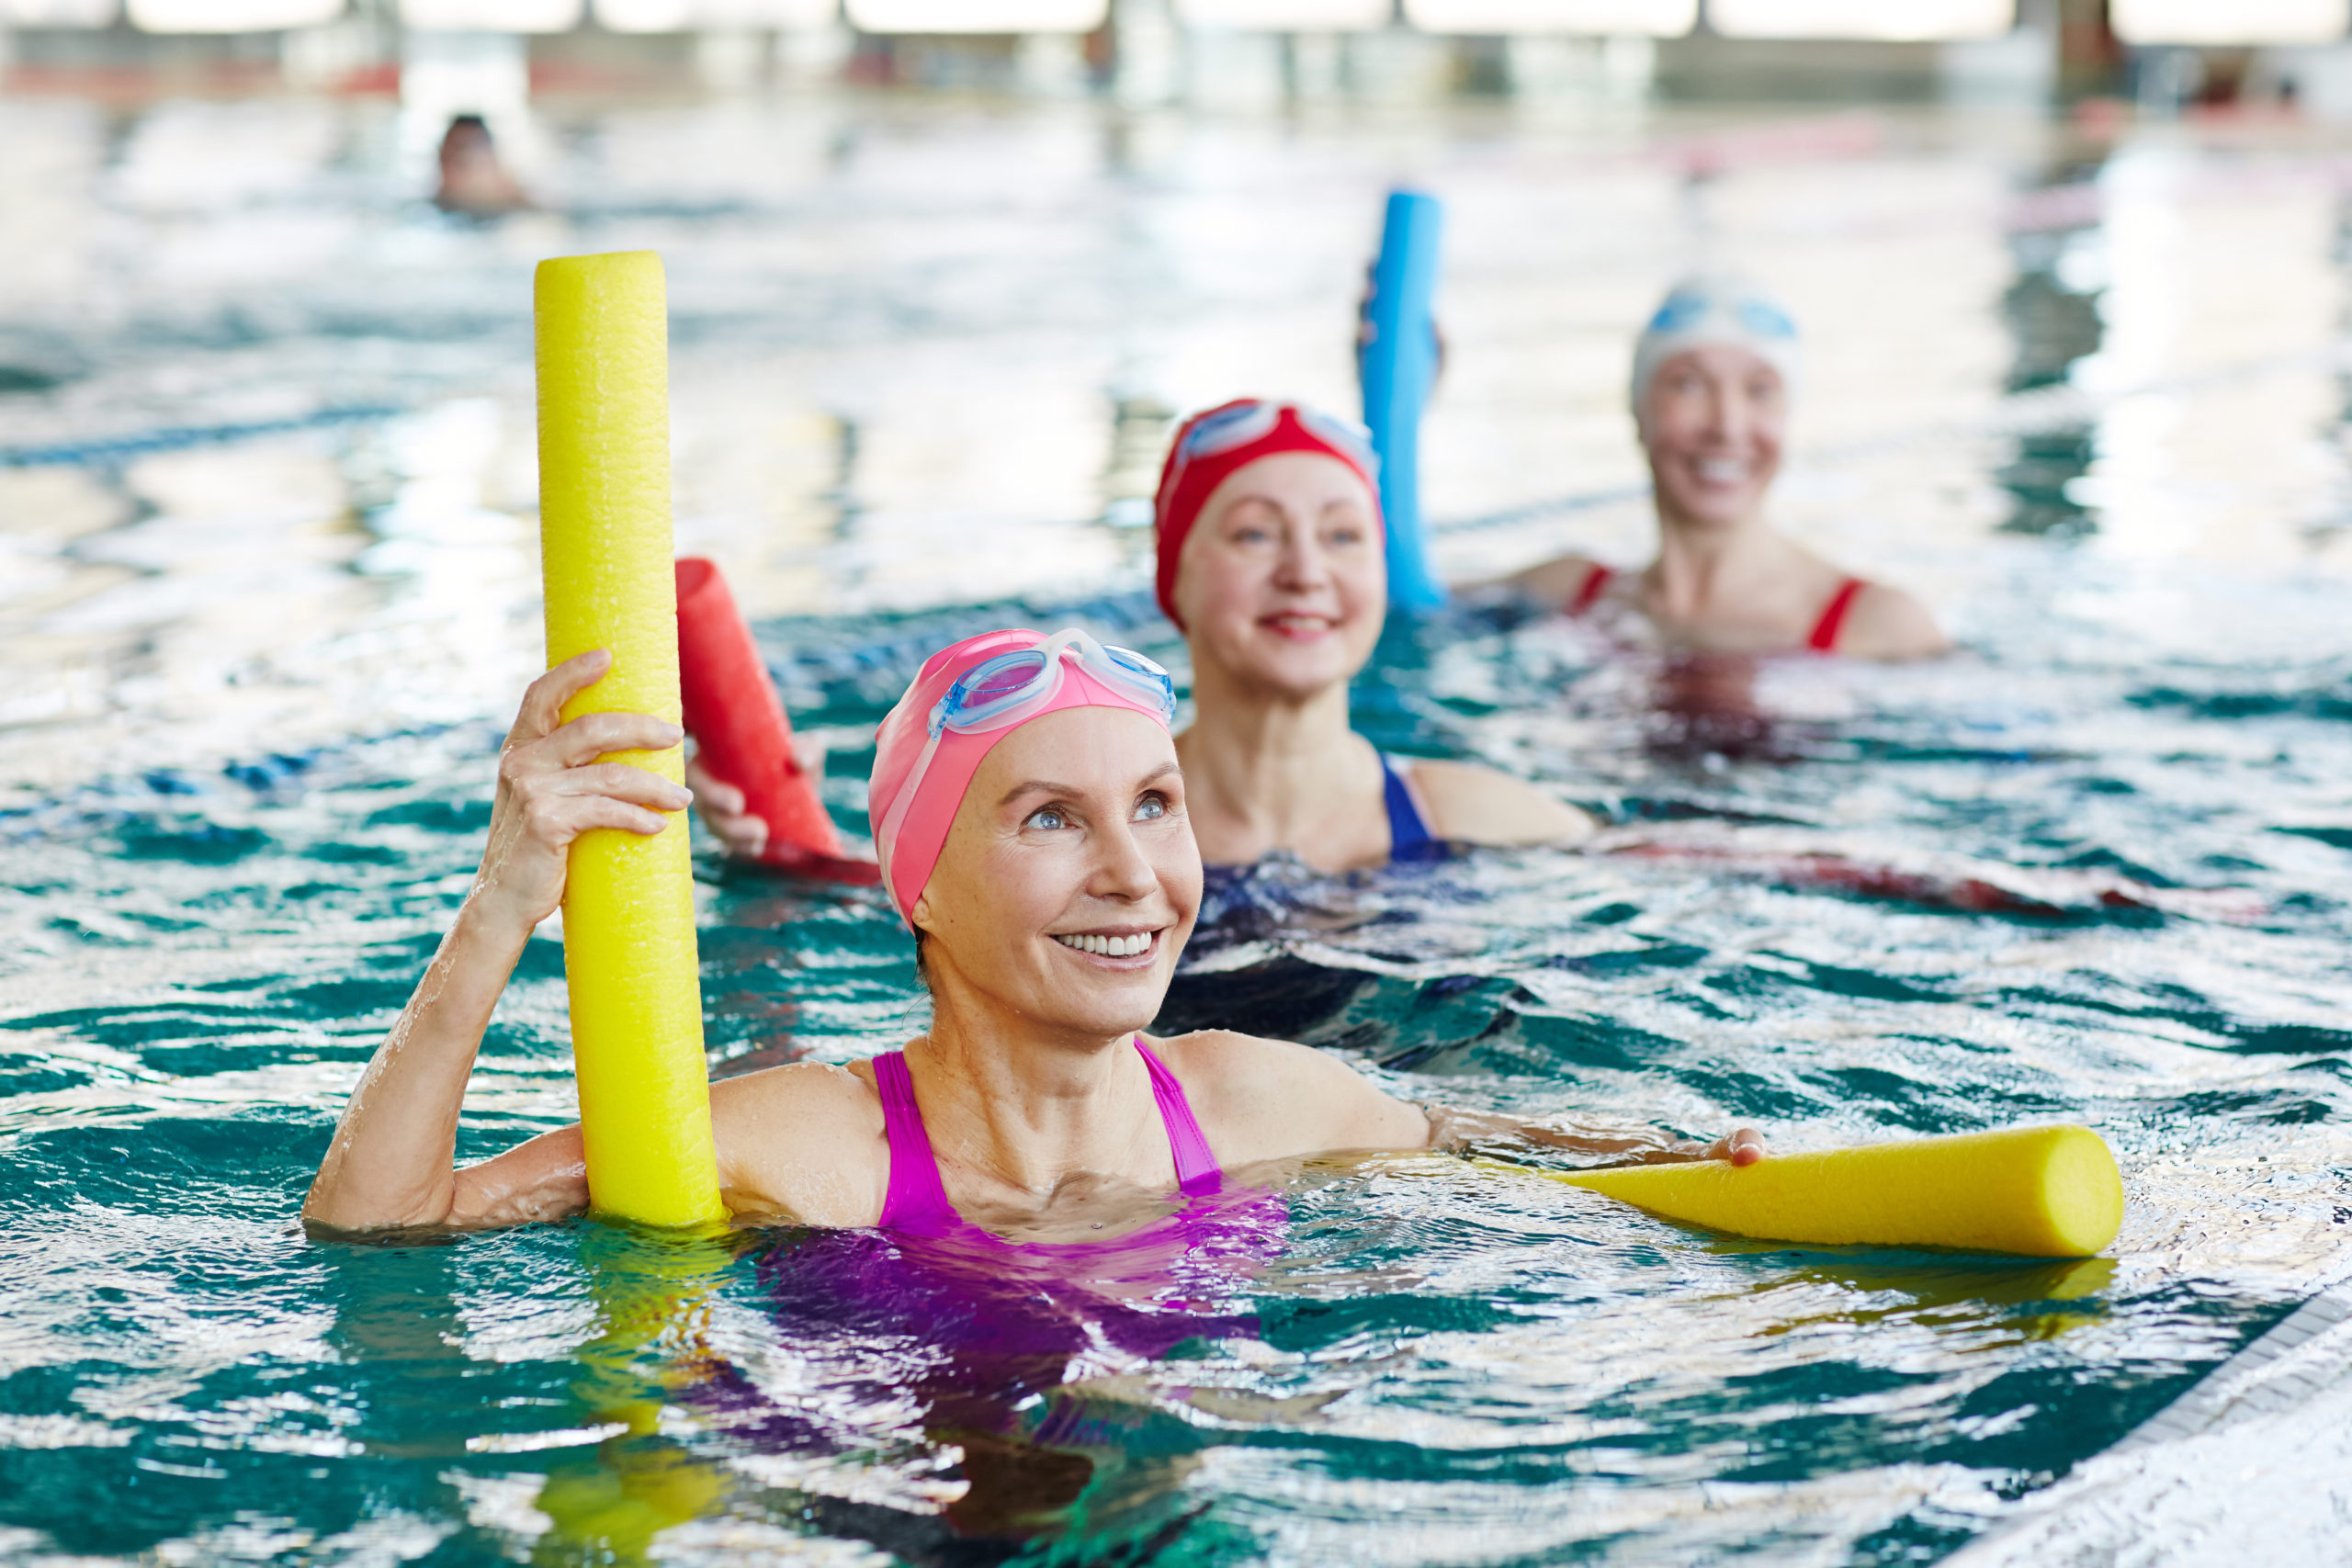 Senior water Aerobics in swimming pool